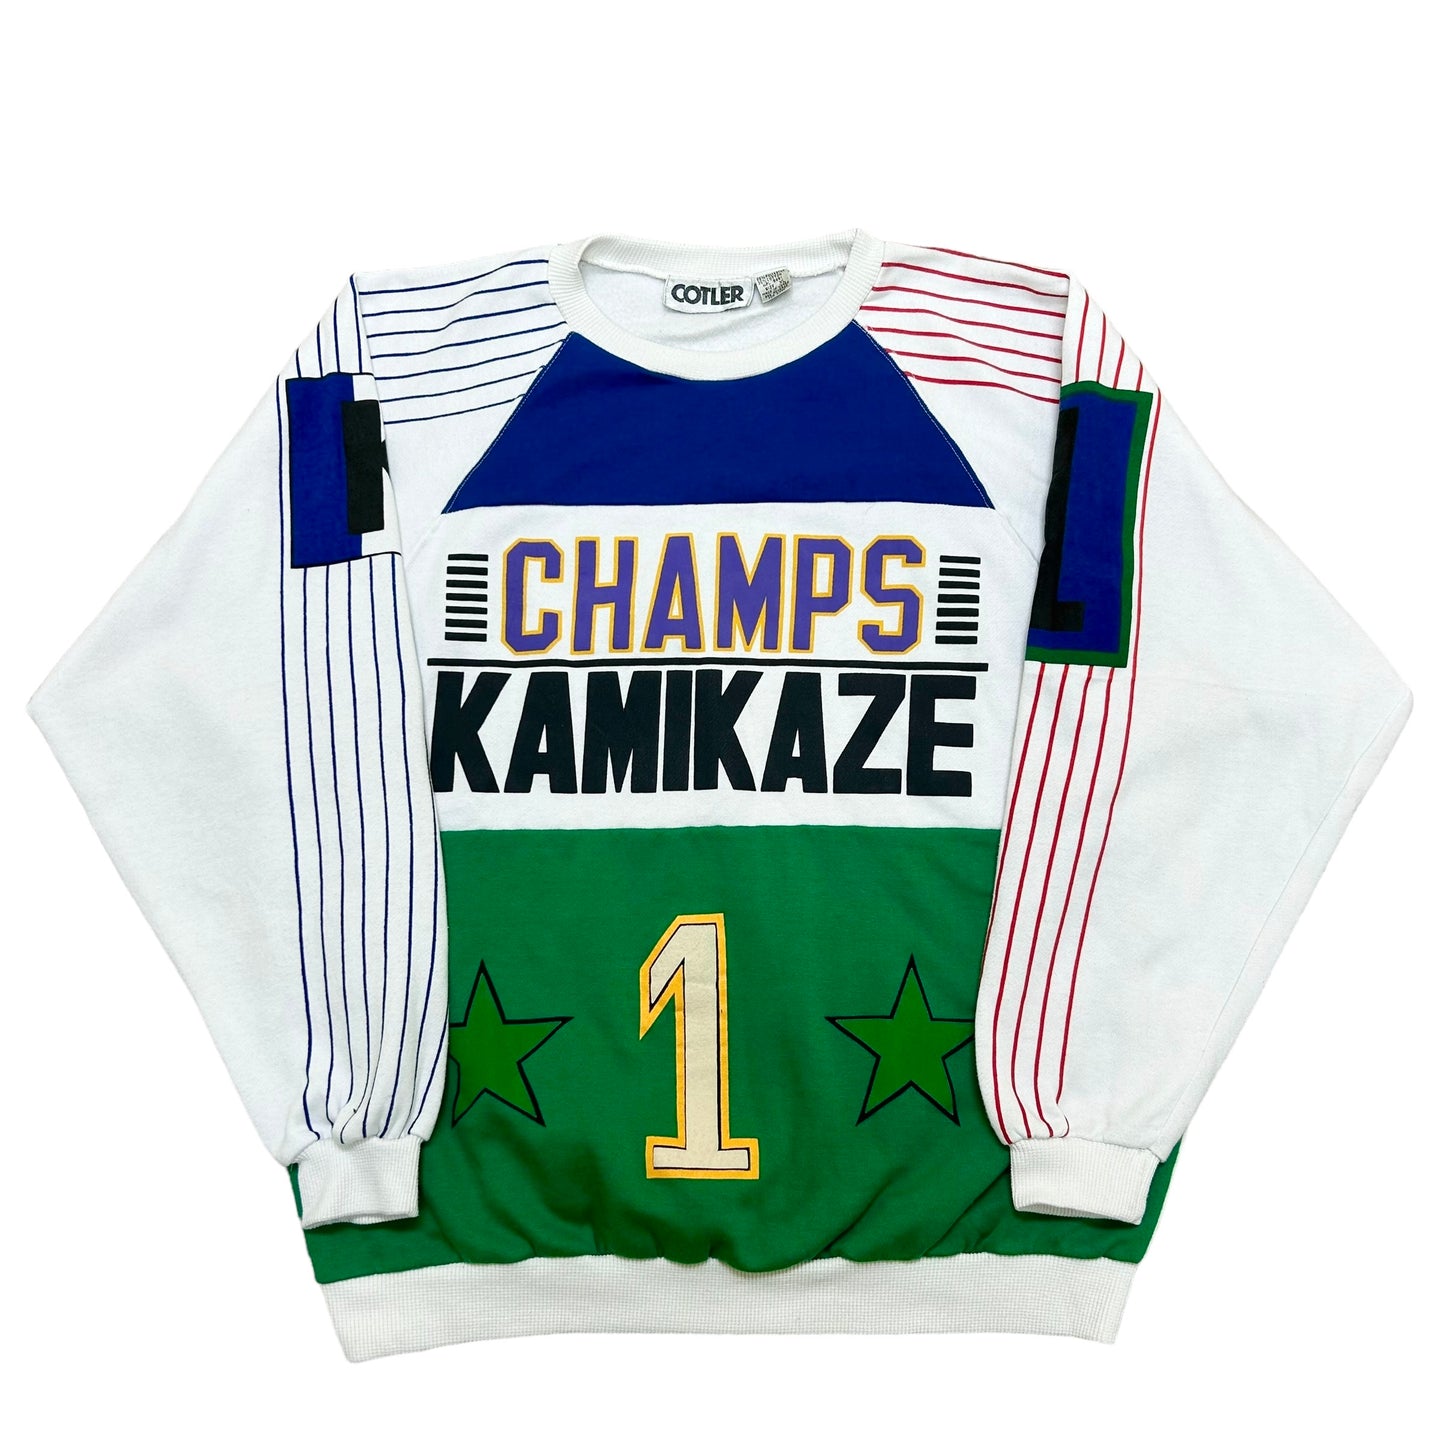 Vintage 1980s Cotler “Champs Kamikaze” White Crewneck Sweatshirt- Size Large